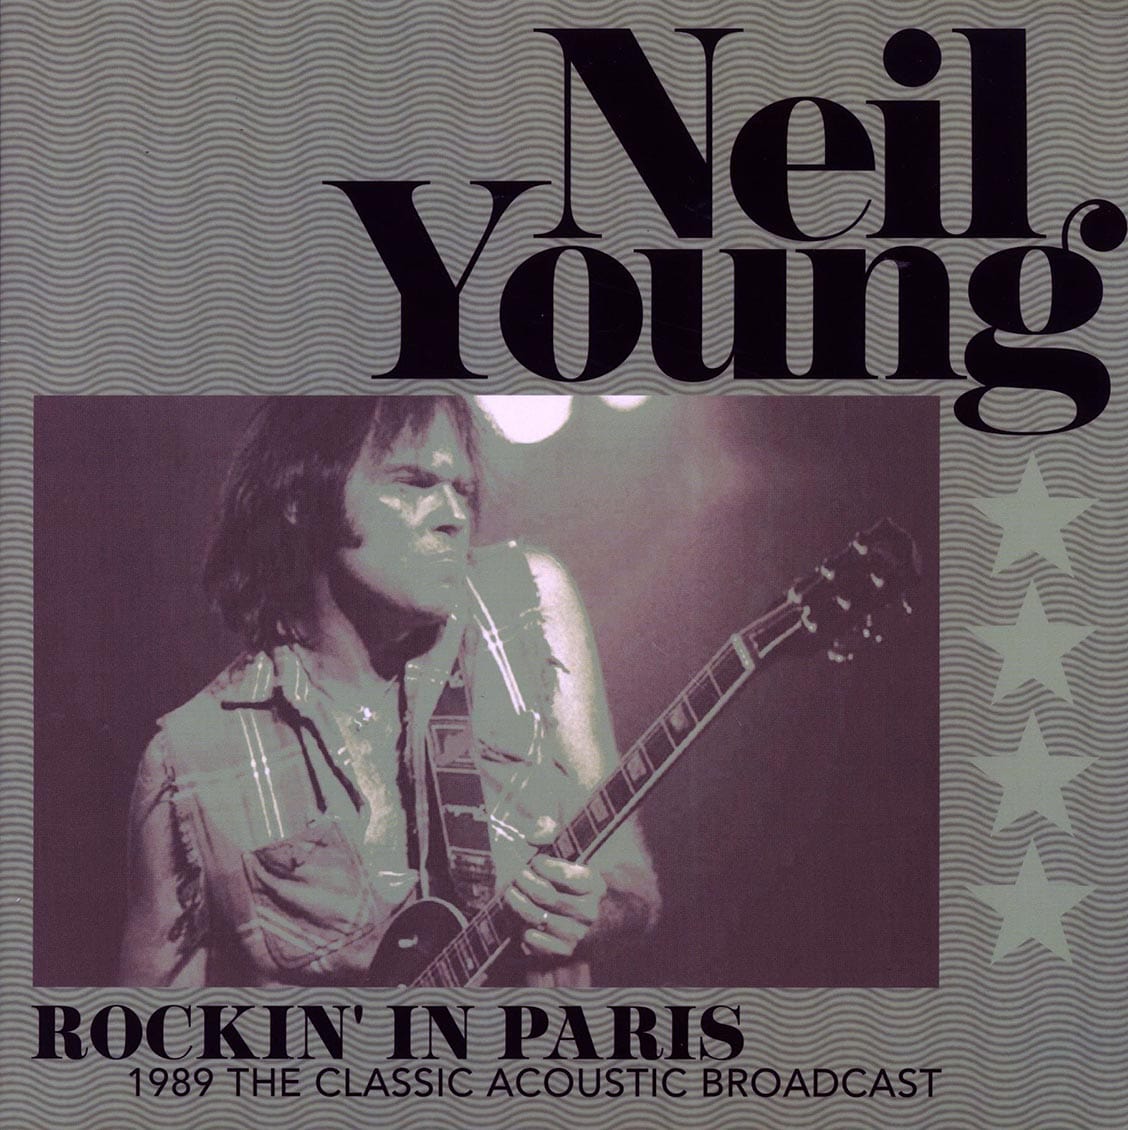 NEIL YOUNG: Rockin' In Paris - 1989 The Classic Acoustic Broadcast (Ltd. 500 Copies on green vinyl) LP